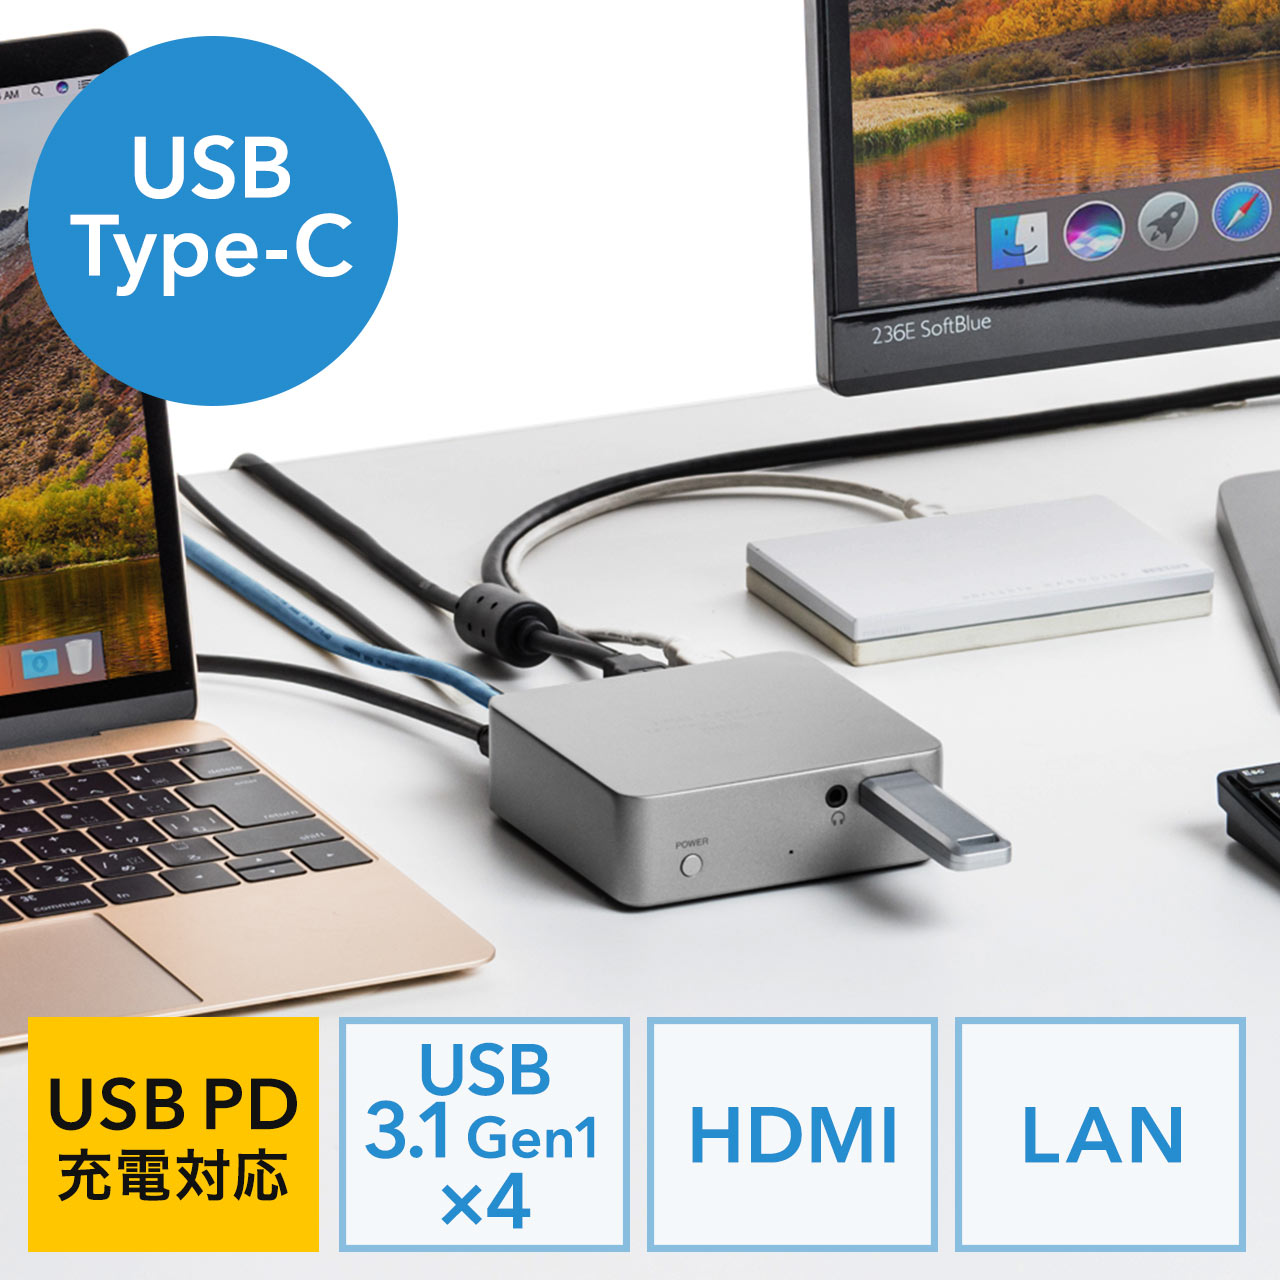 USB Type-C ハブ 7in1 4K HDMI USB3.0 PD対応 hub SD microSDカード